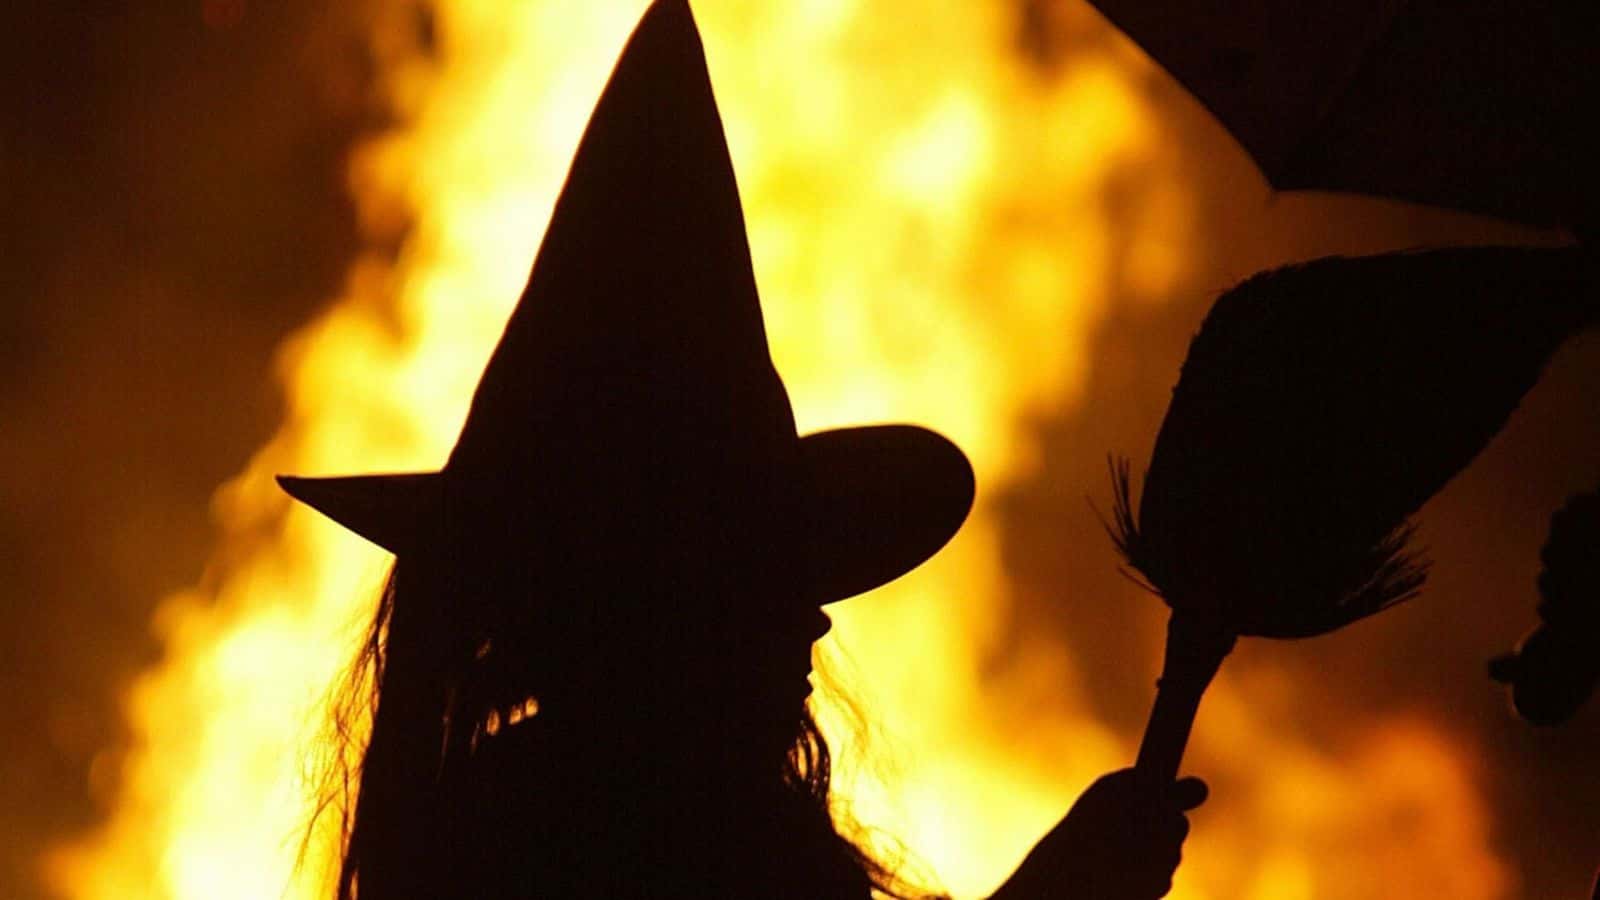 Salem Witch Trials facts